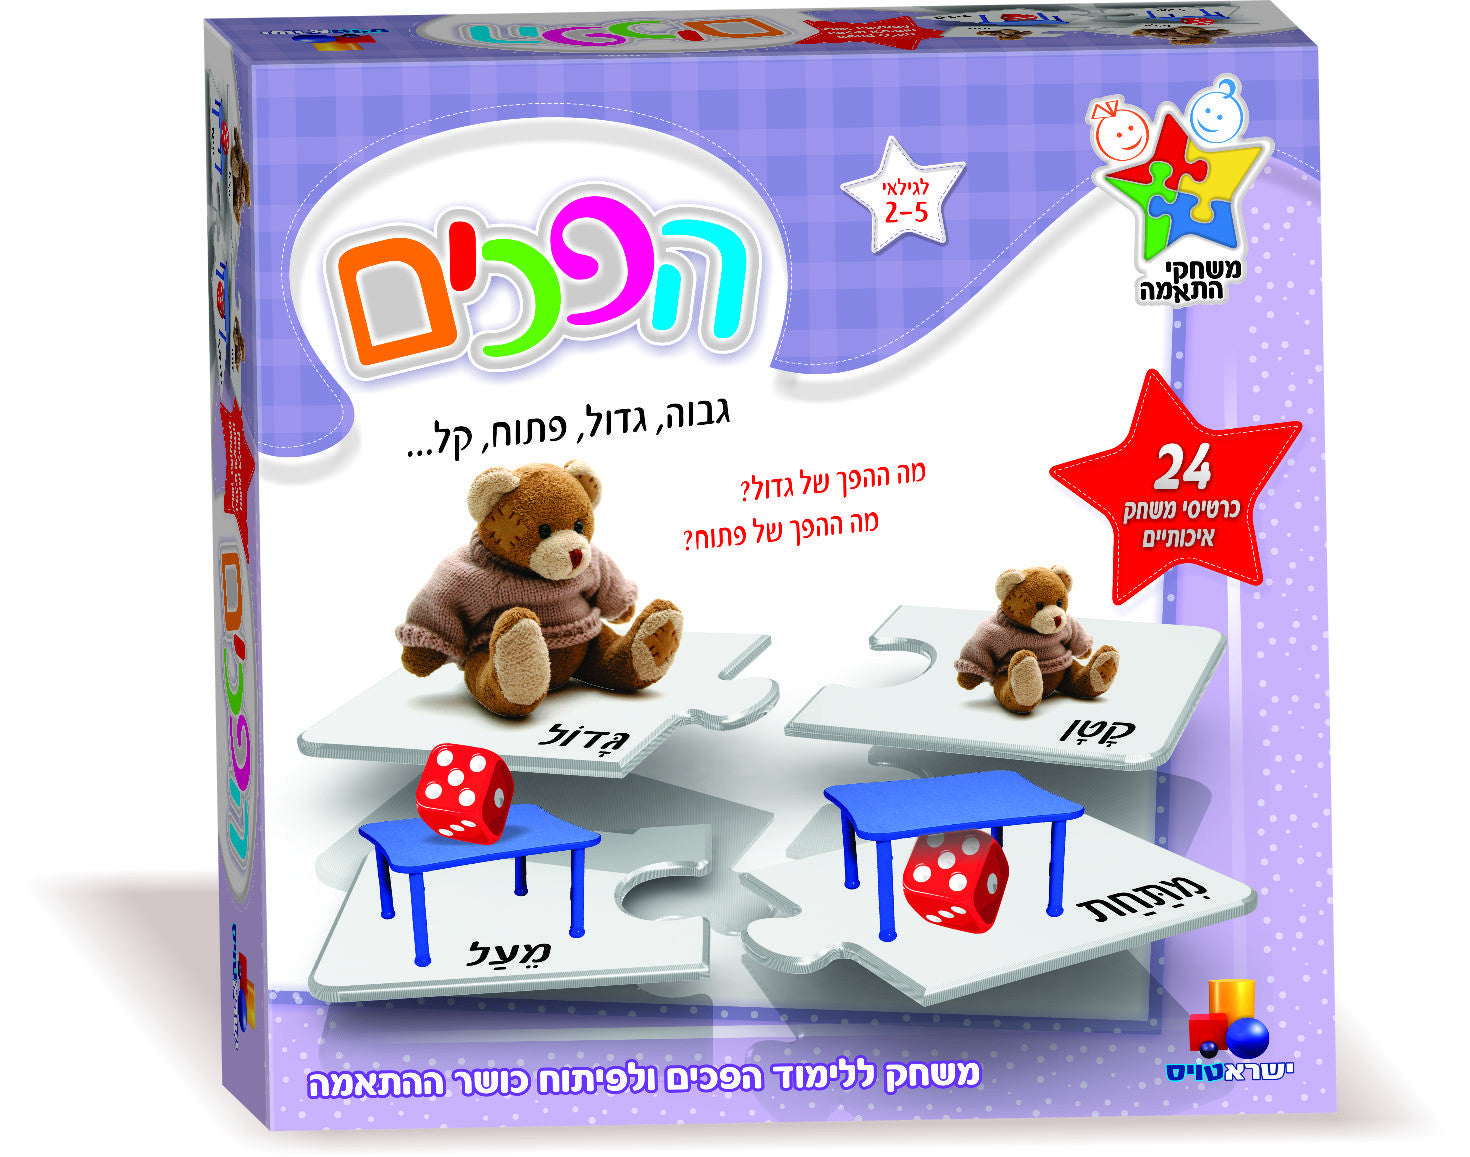 Opposites - Matching Games in Hebrew